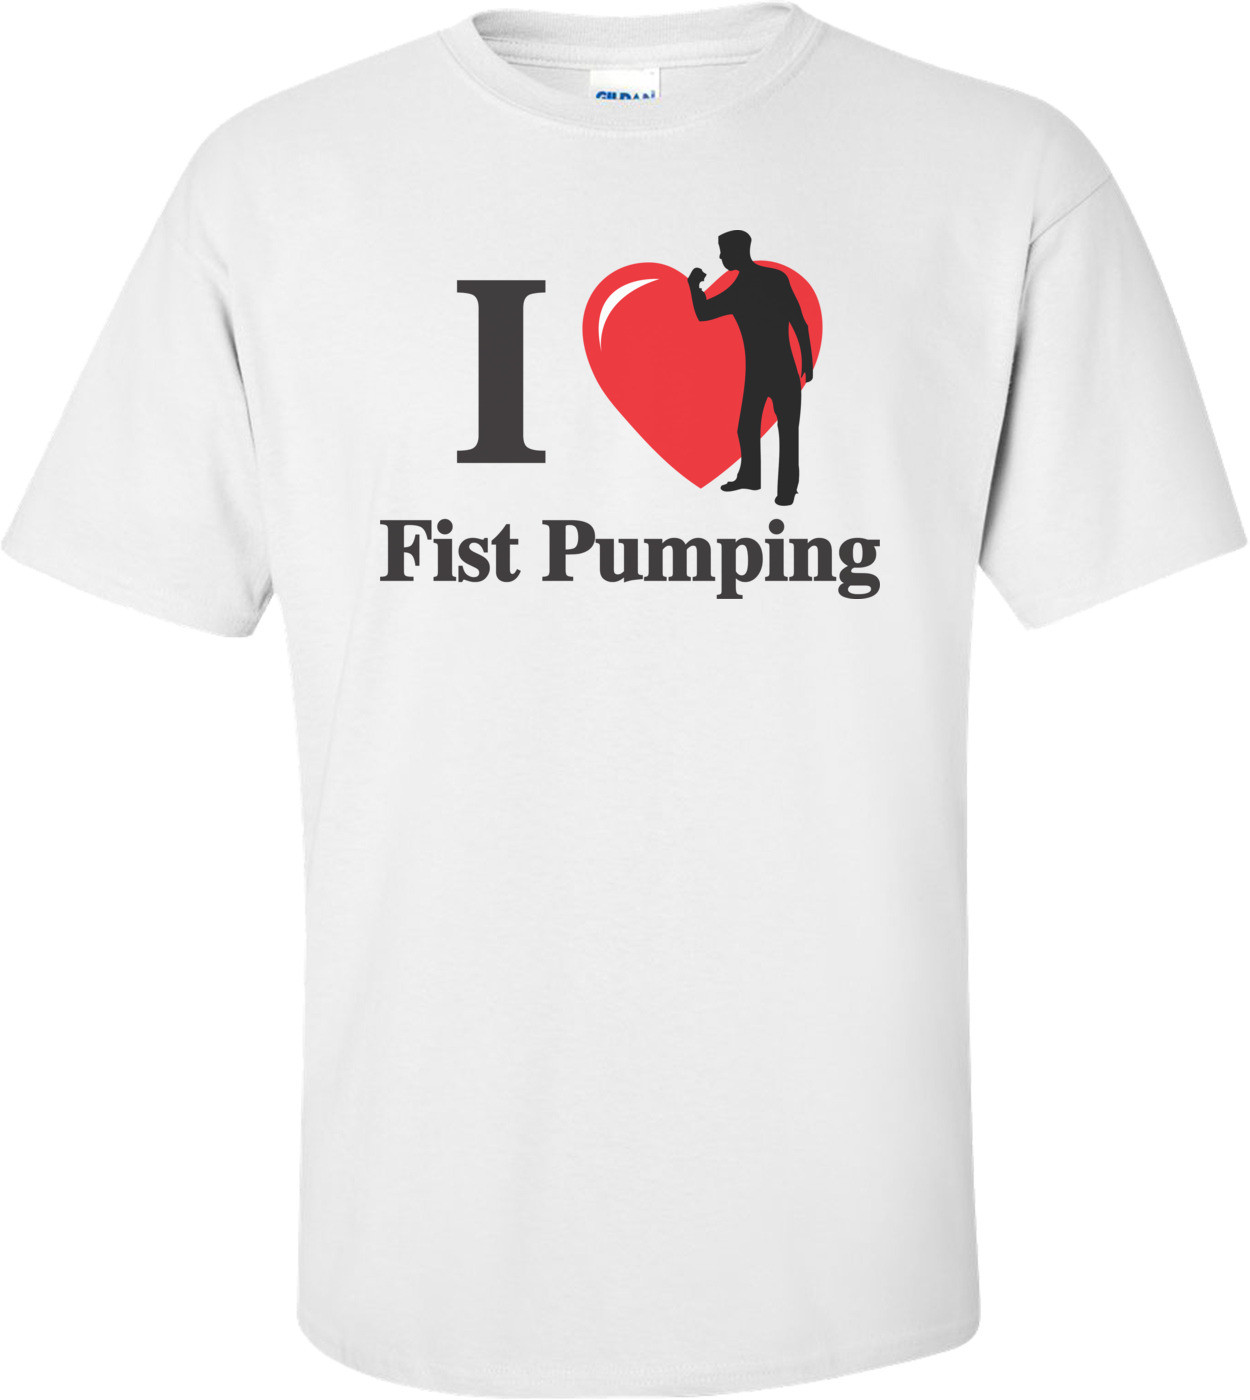 I Love Fist Pumping - Jersey Shore